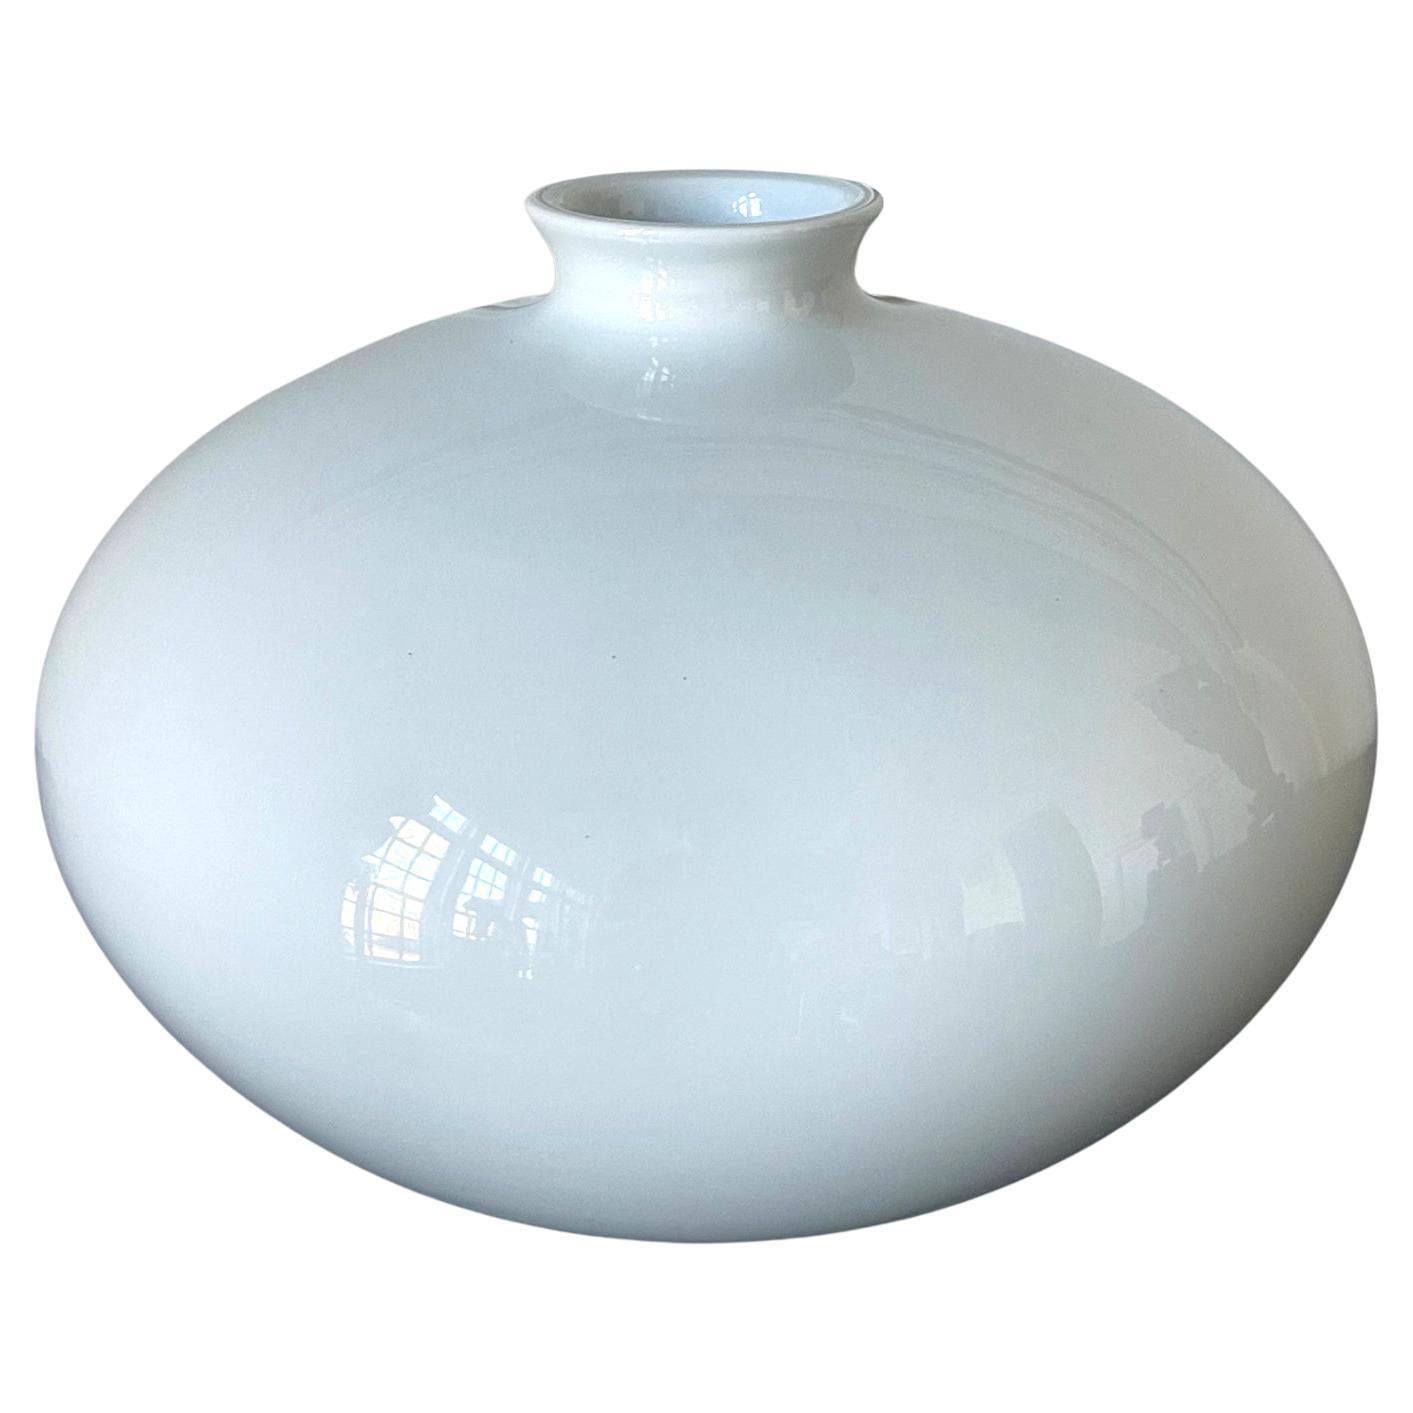 Contemporary Japanese White Glaze Ceramic Vase by Manji Inoue For Sale